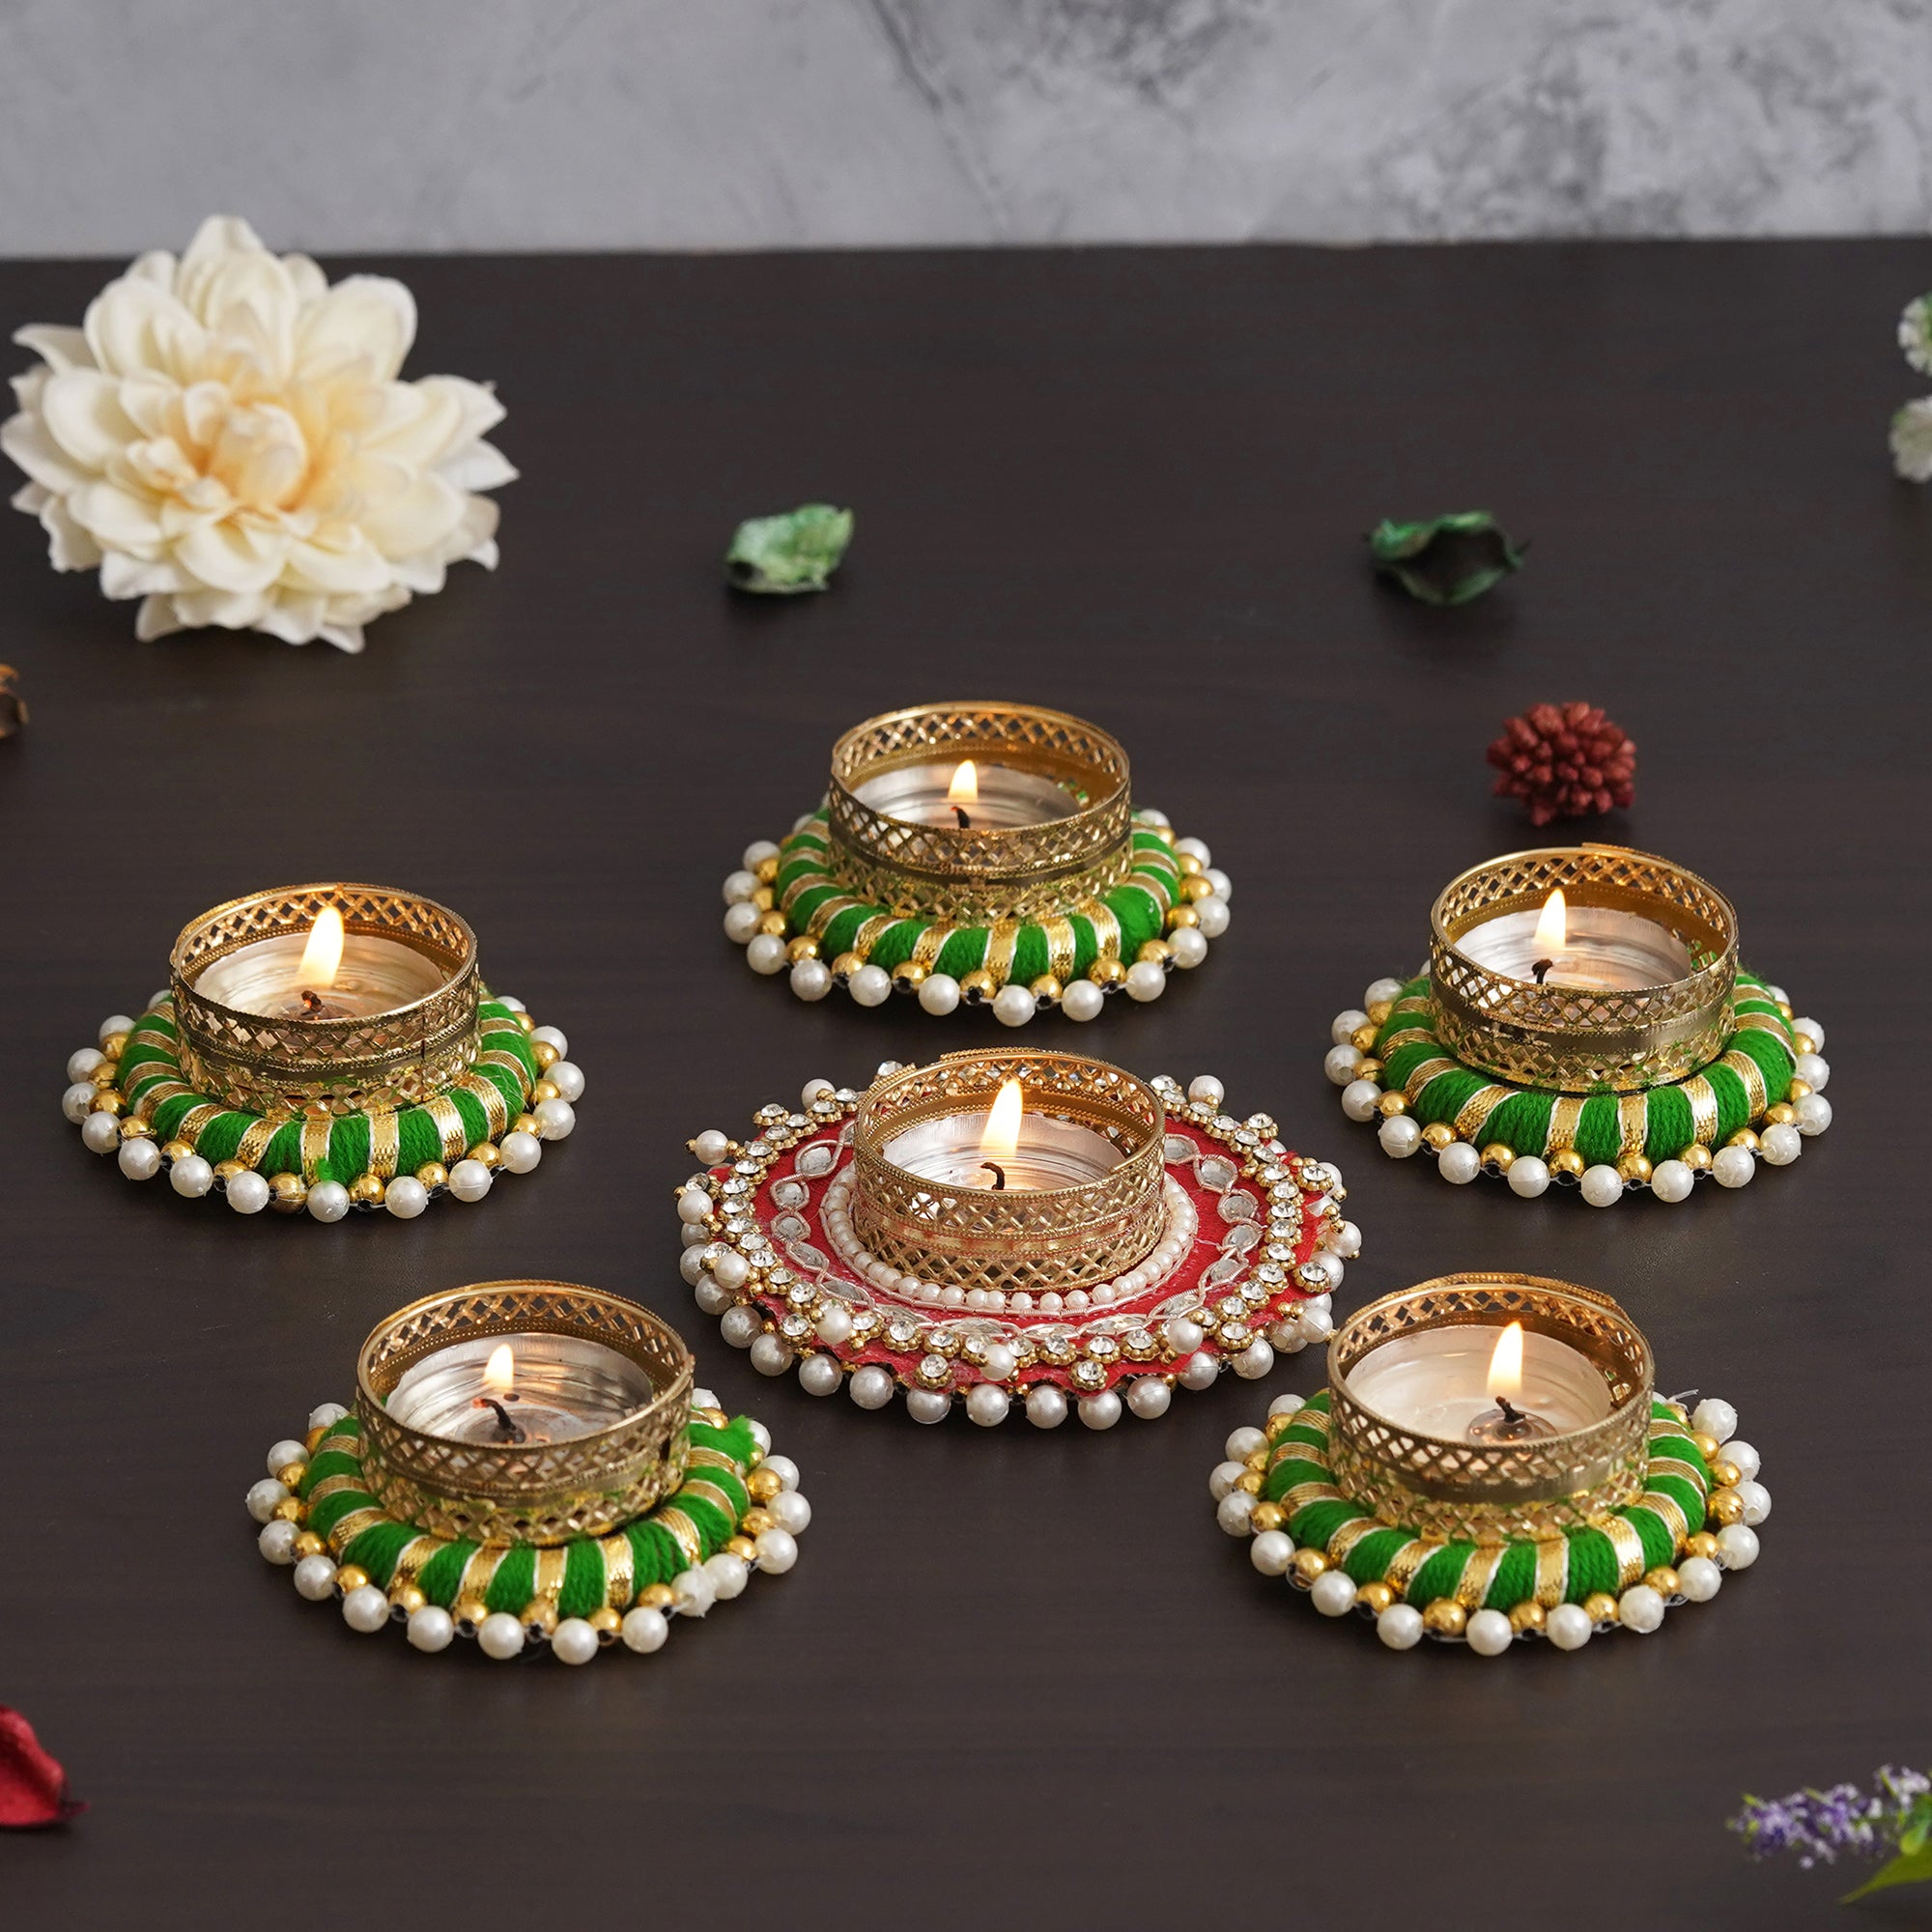 eCraftIndia Set of 7 Round Shaped Diamond Beads and Pearls Decorative Tea Light Candle Holders 4